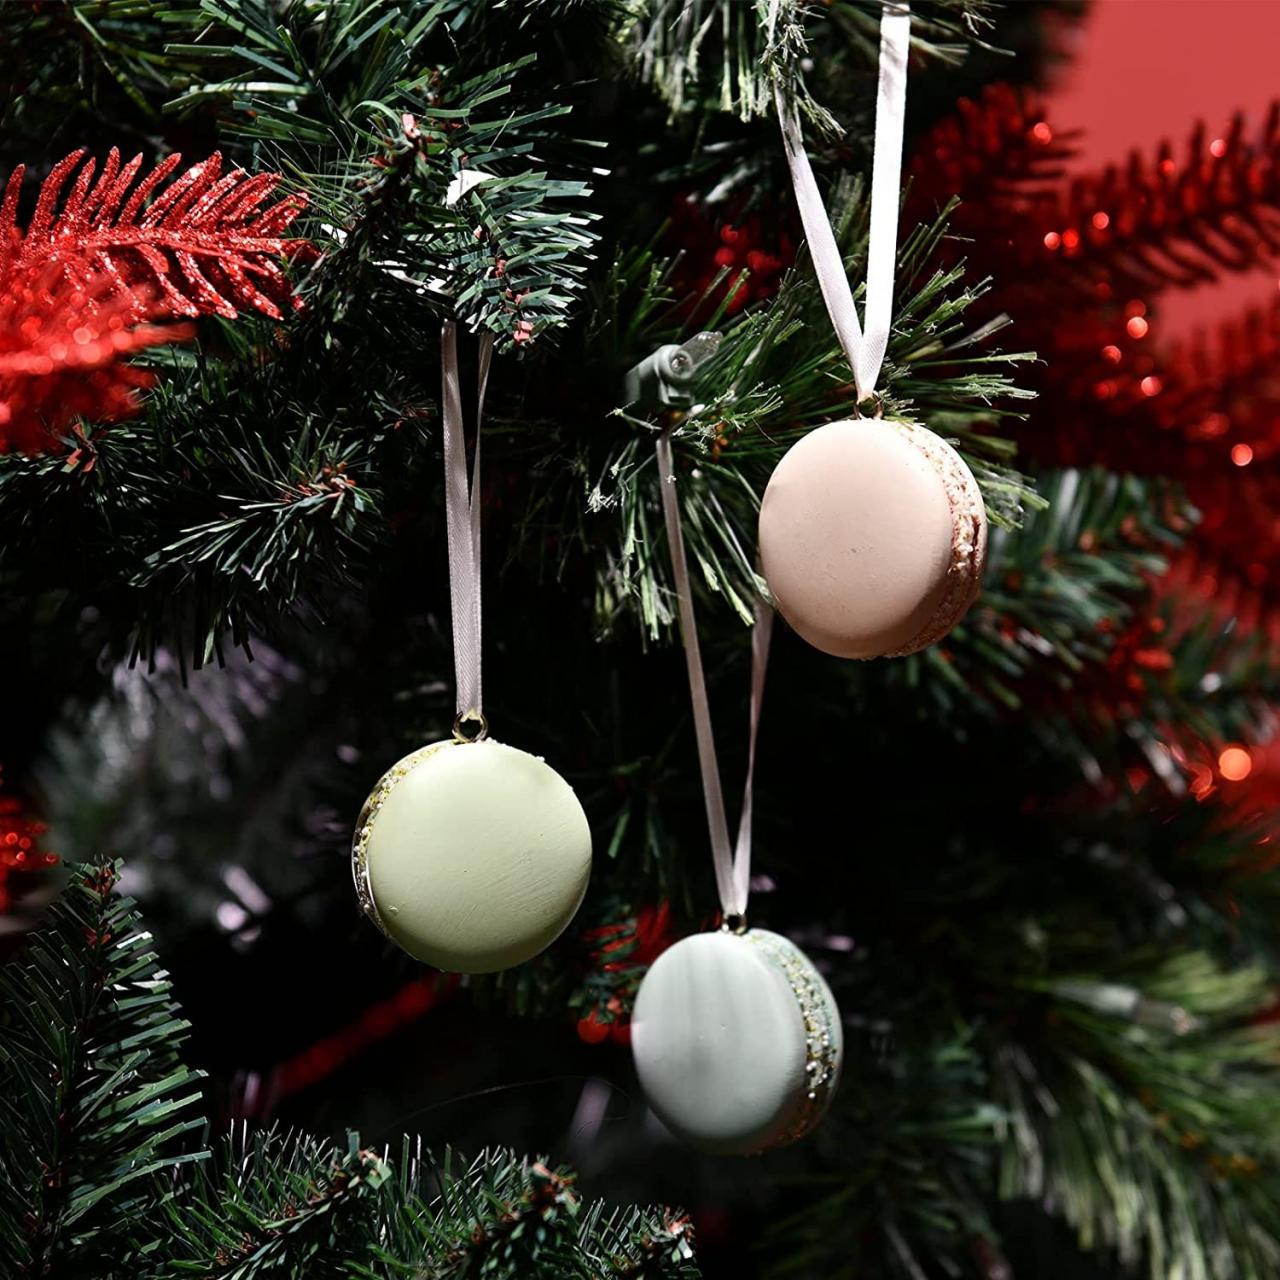 Macaroon Christmas Ornaments Decorative Ornament Holiday Decorative Hanging Ornaments For Christmas Tree Gift Festival Decor